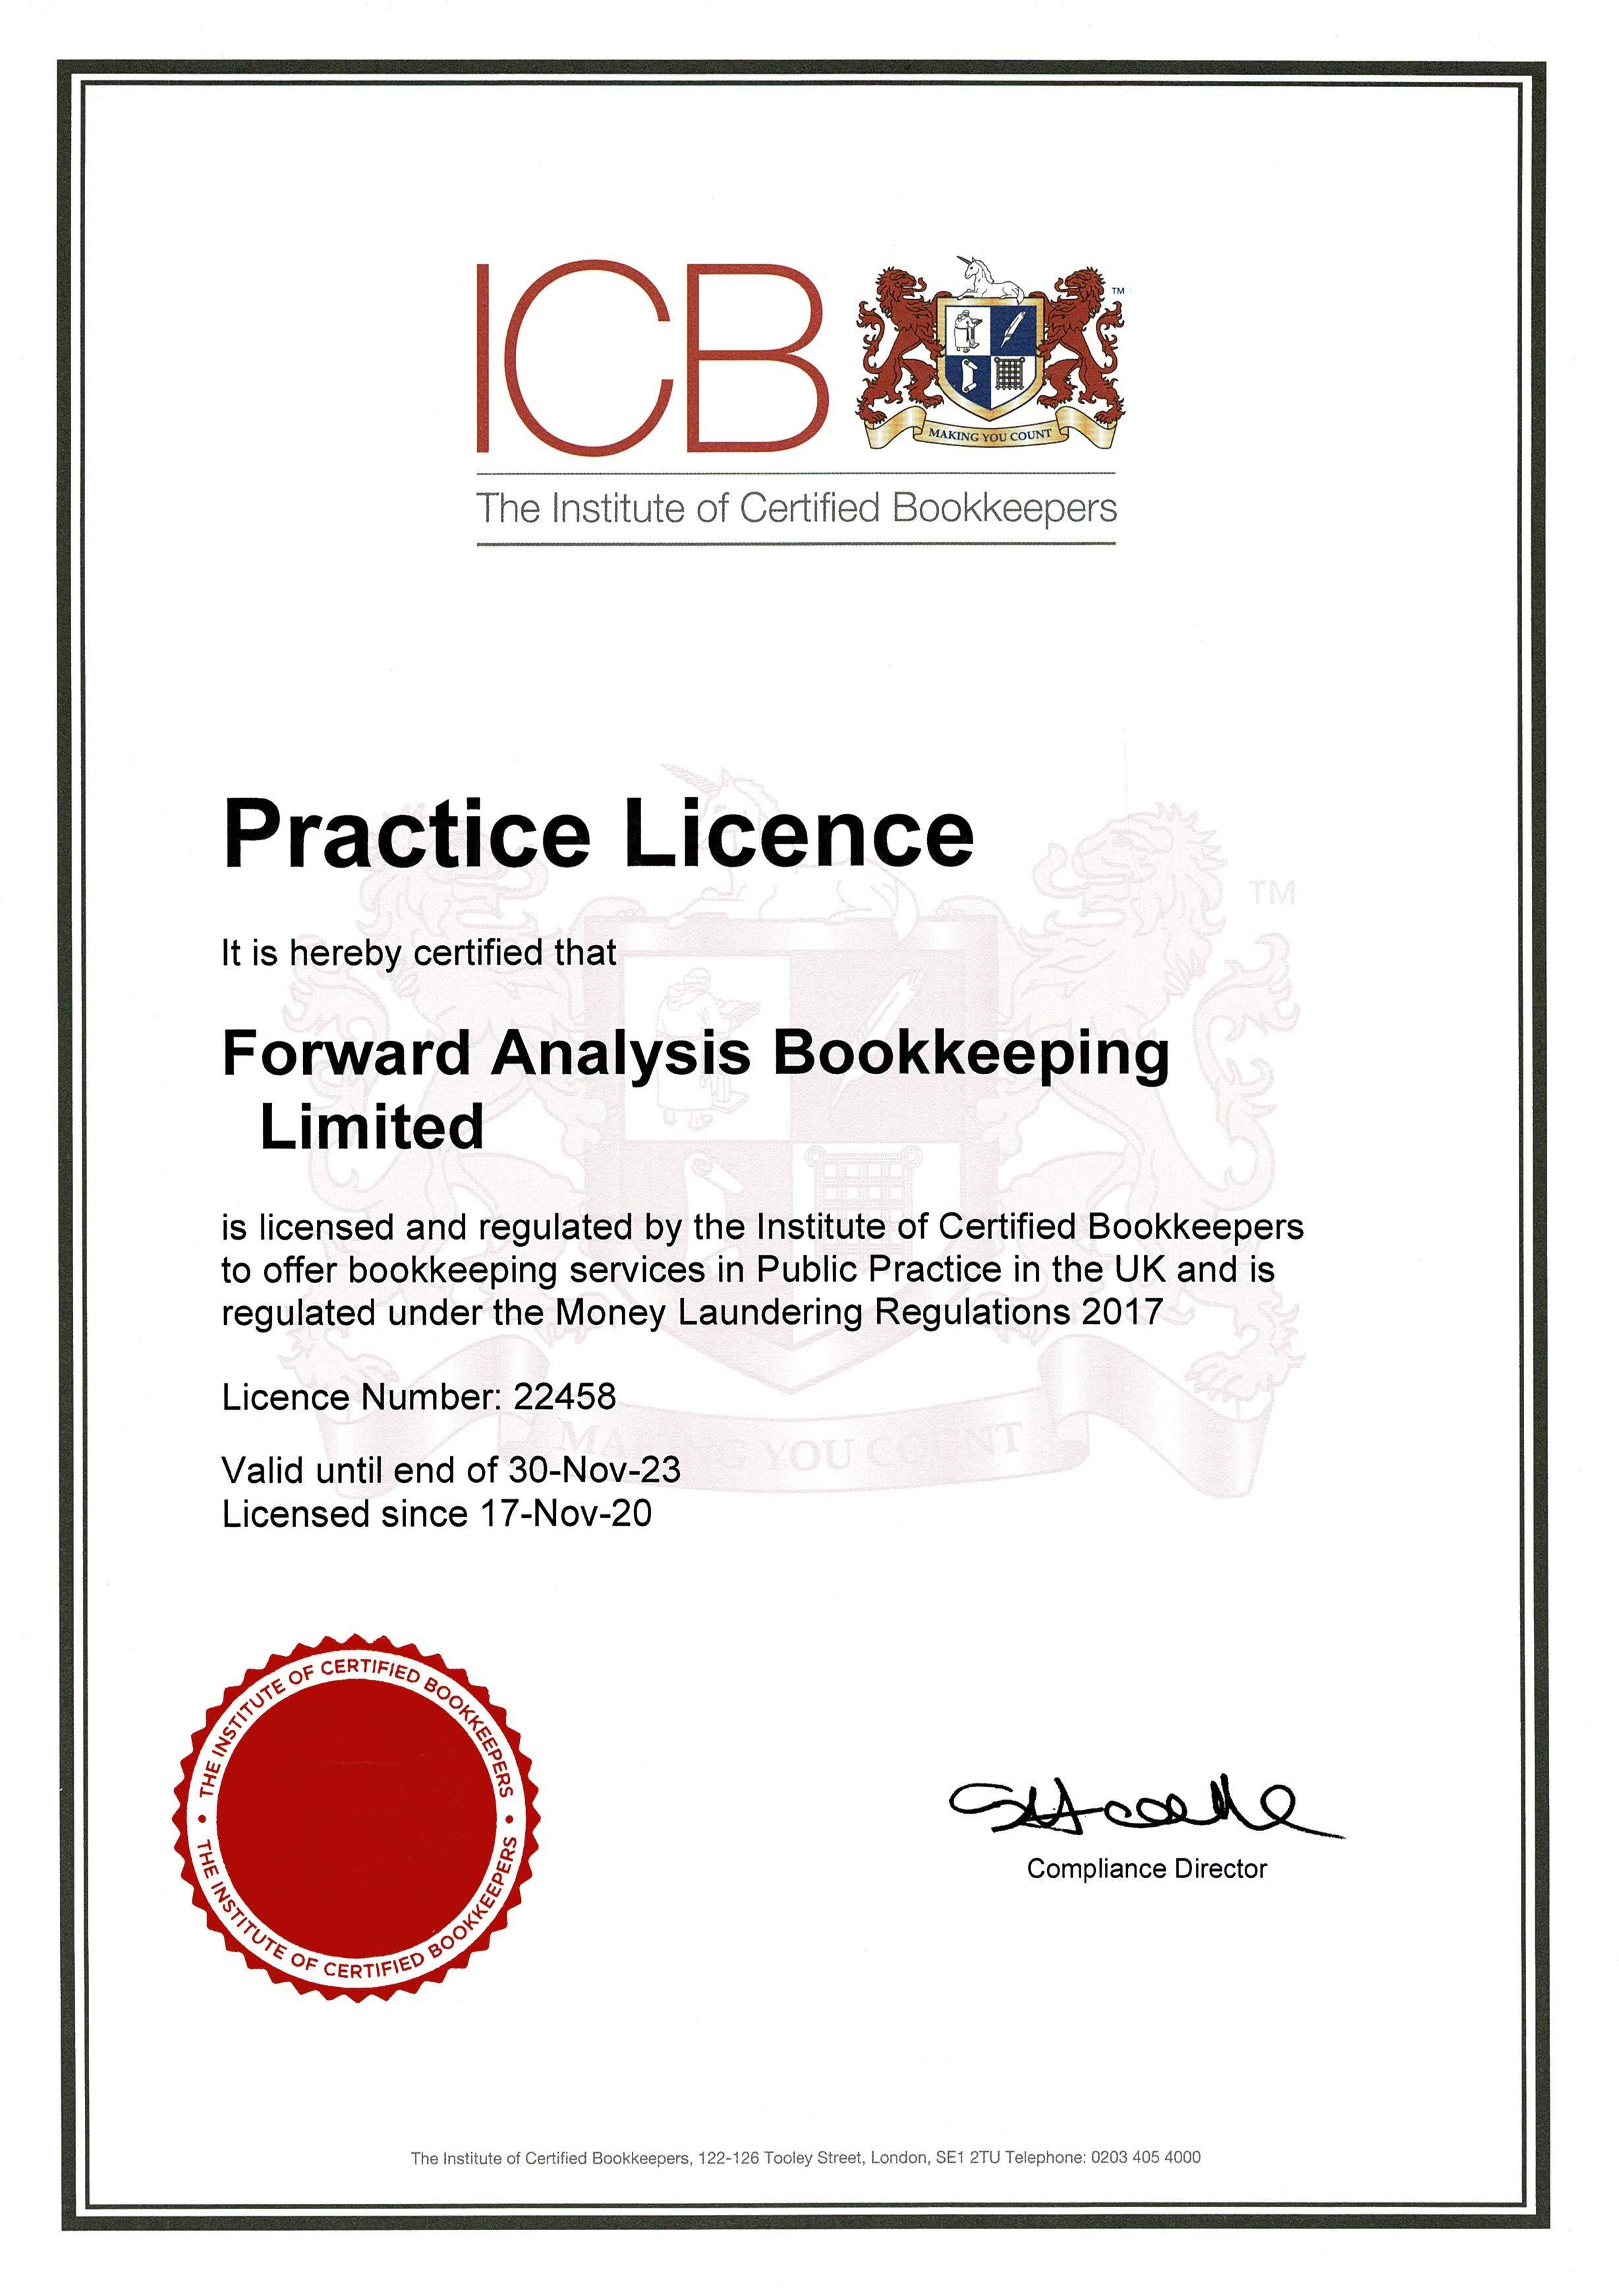 ICB Practice certificate 2022 - 2023